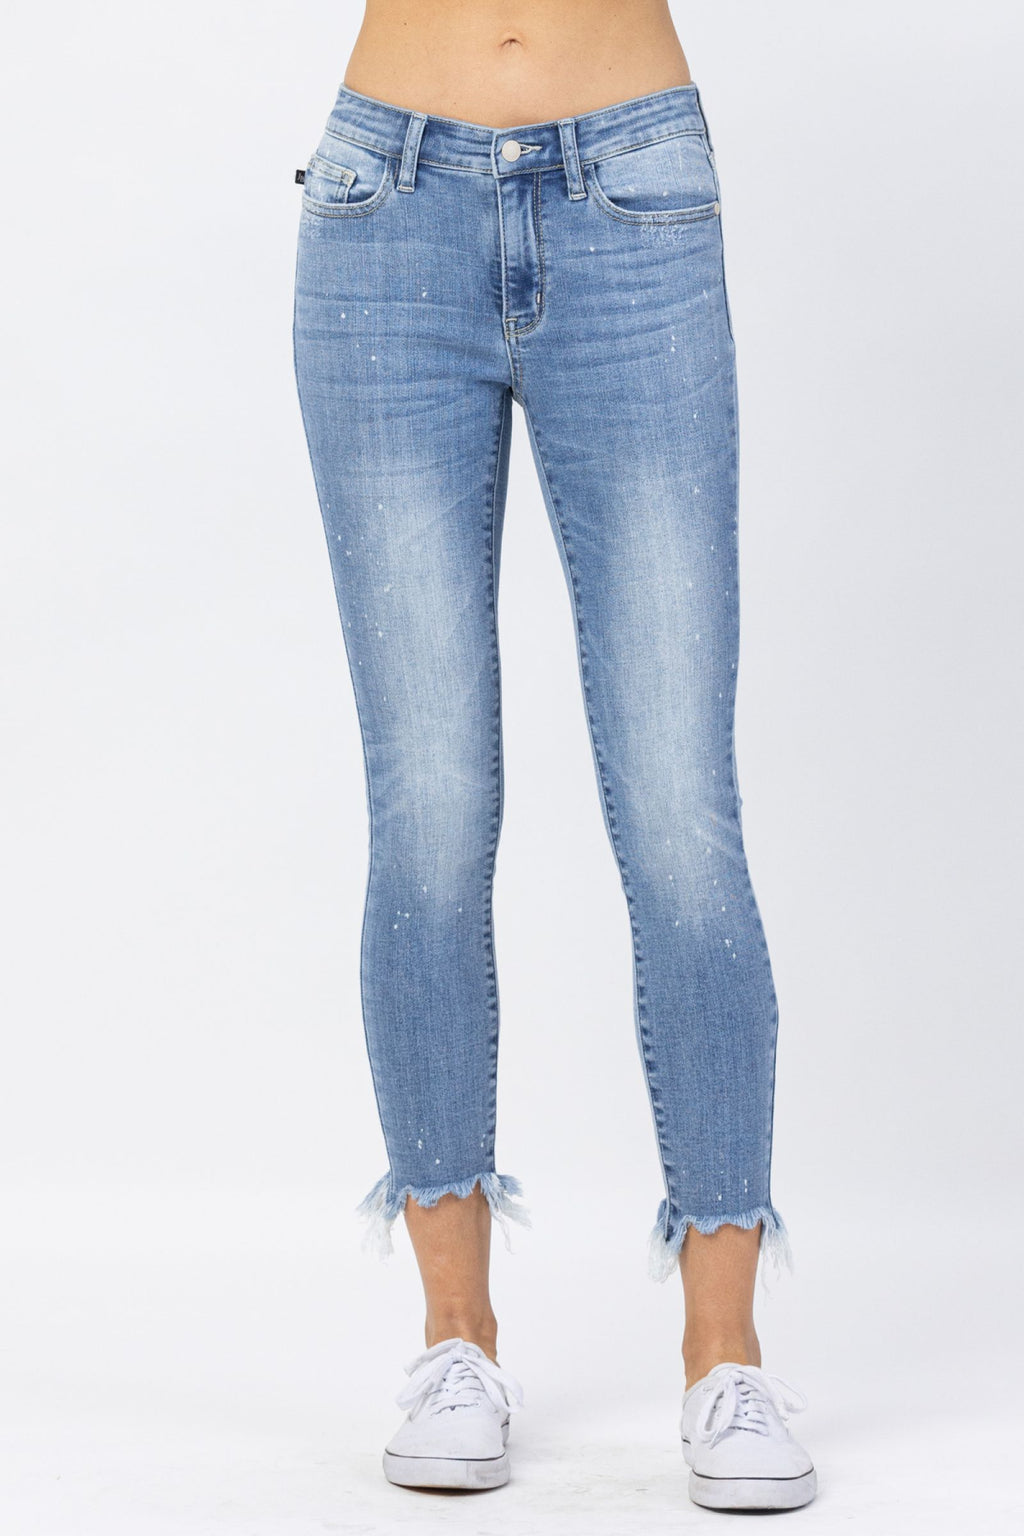 Judy Blue REG/CURVY Handsand Skinny Jeans FINAL SALE - Madi Savvy Boutique